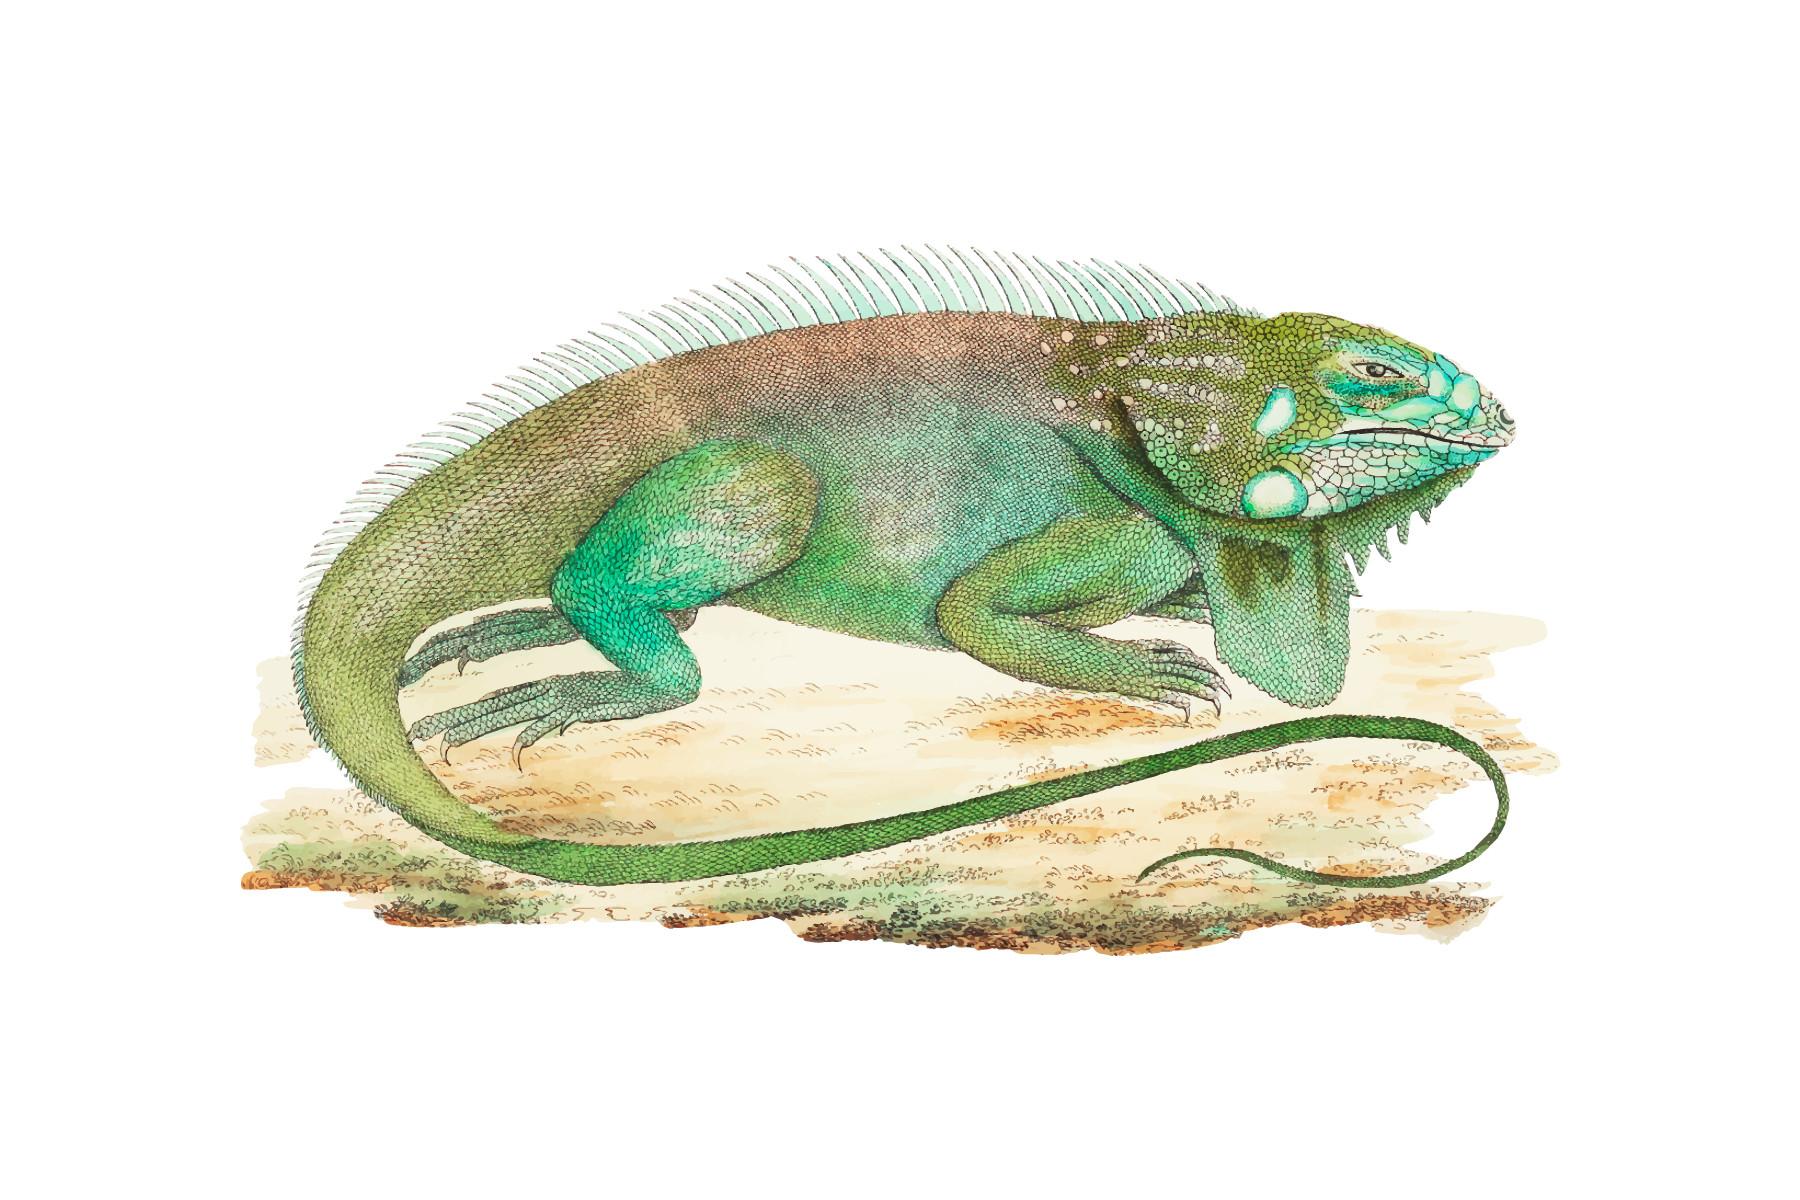 Hand Drawn Iguana or Guana Illustration